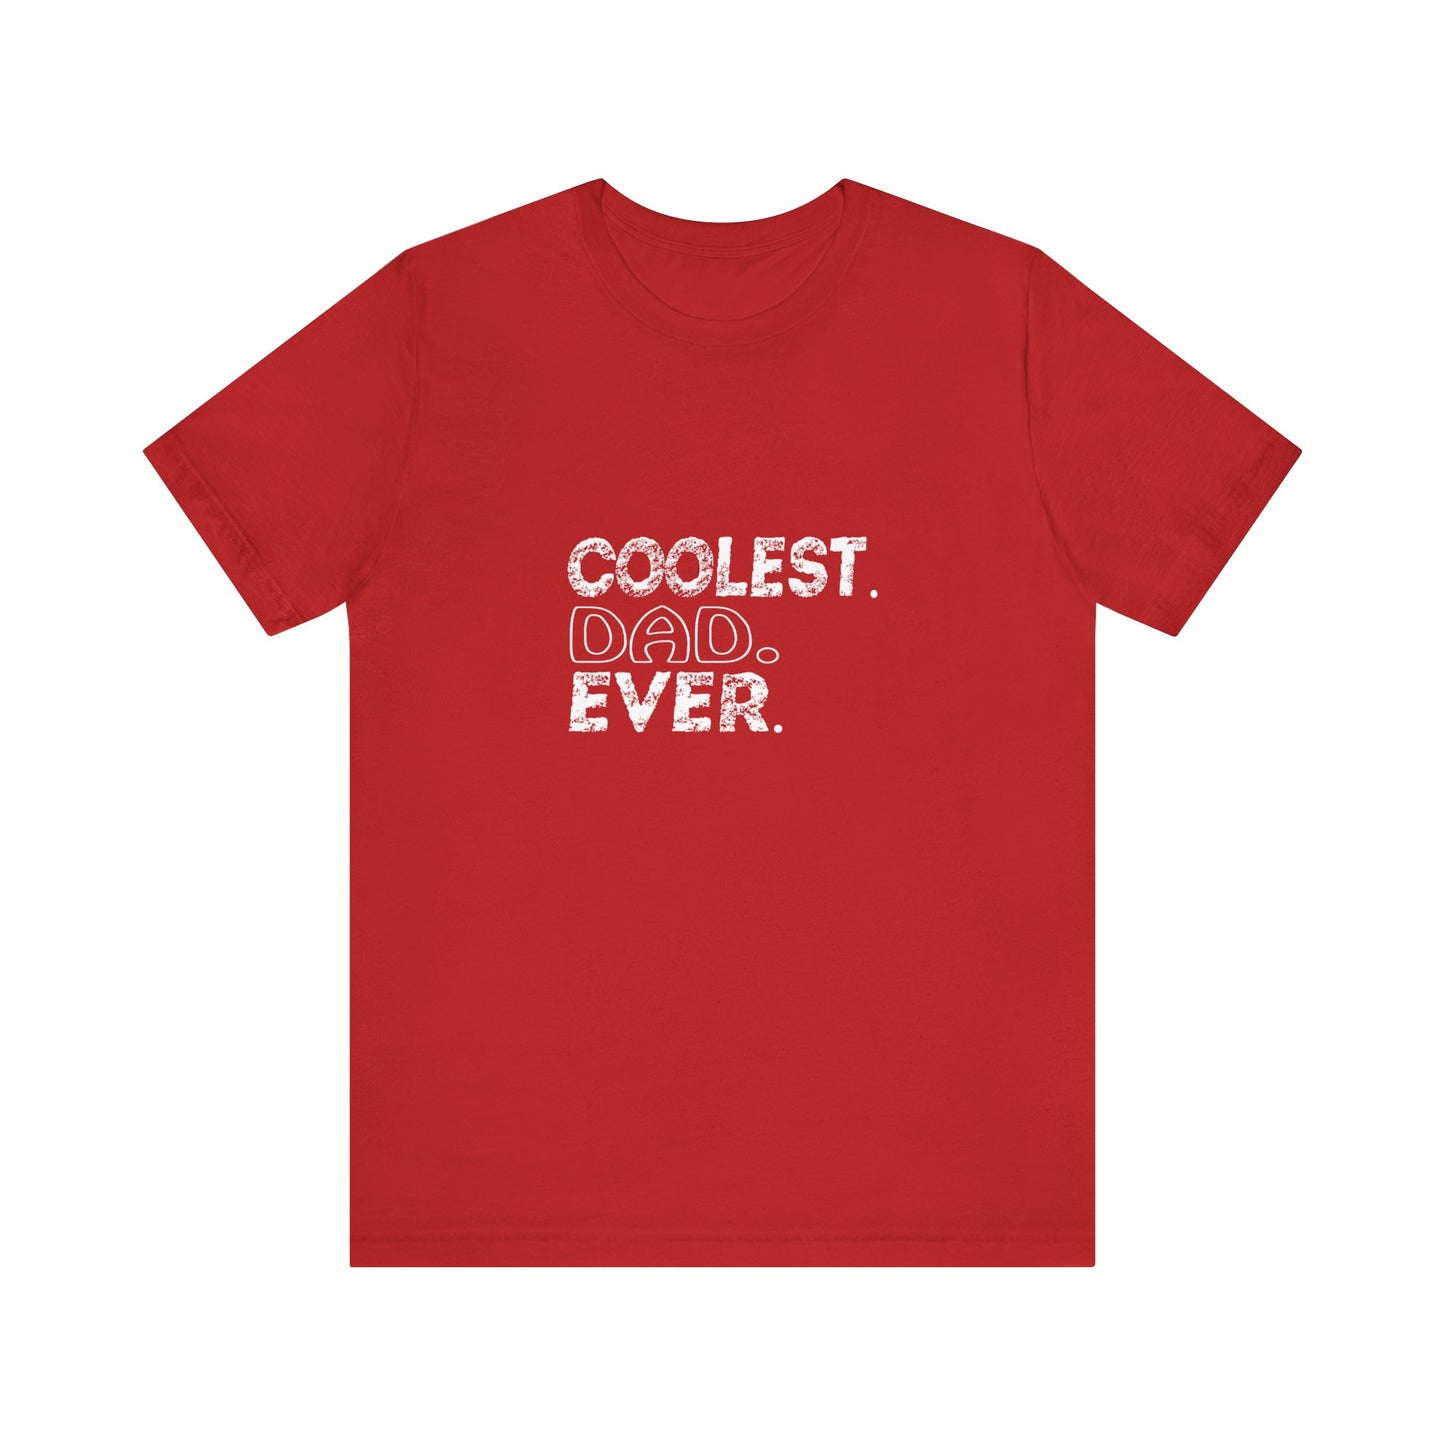 Coolest. Dad. Ever. - Unisex T-Shirt